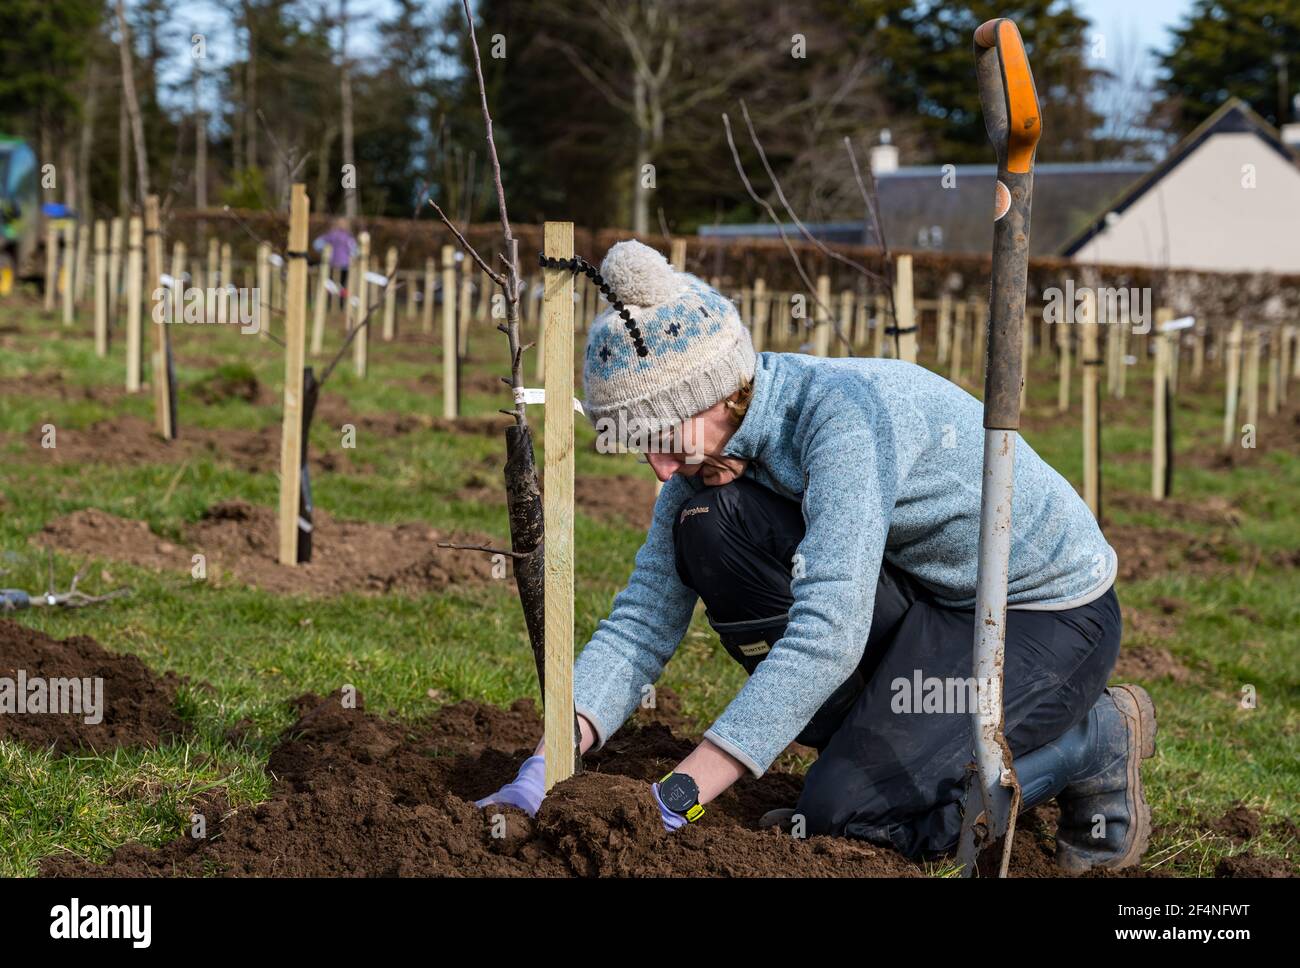 Woman working to plant apple trees in an apple tree orchard, Kilduff Farm, East Lothian, Scotland, UK Stock Photo